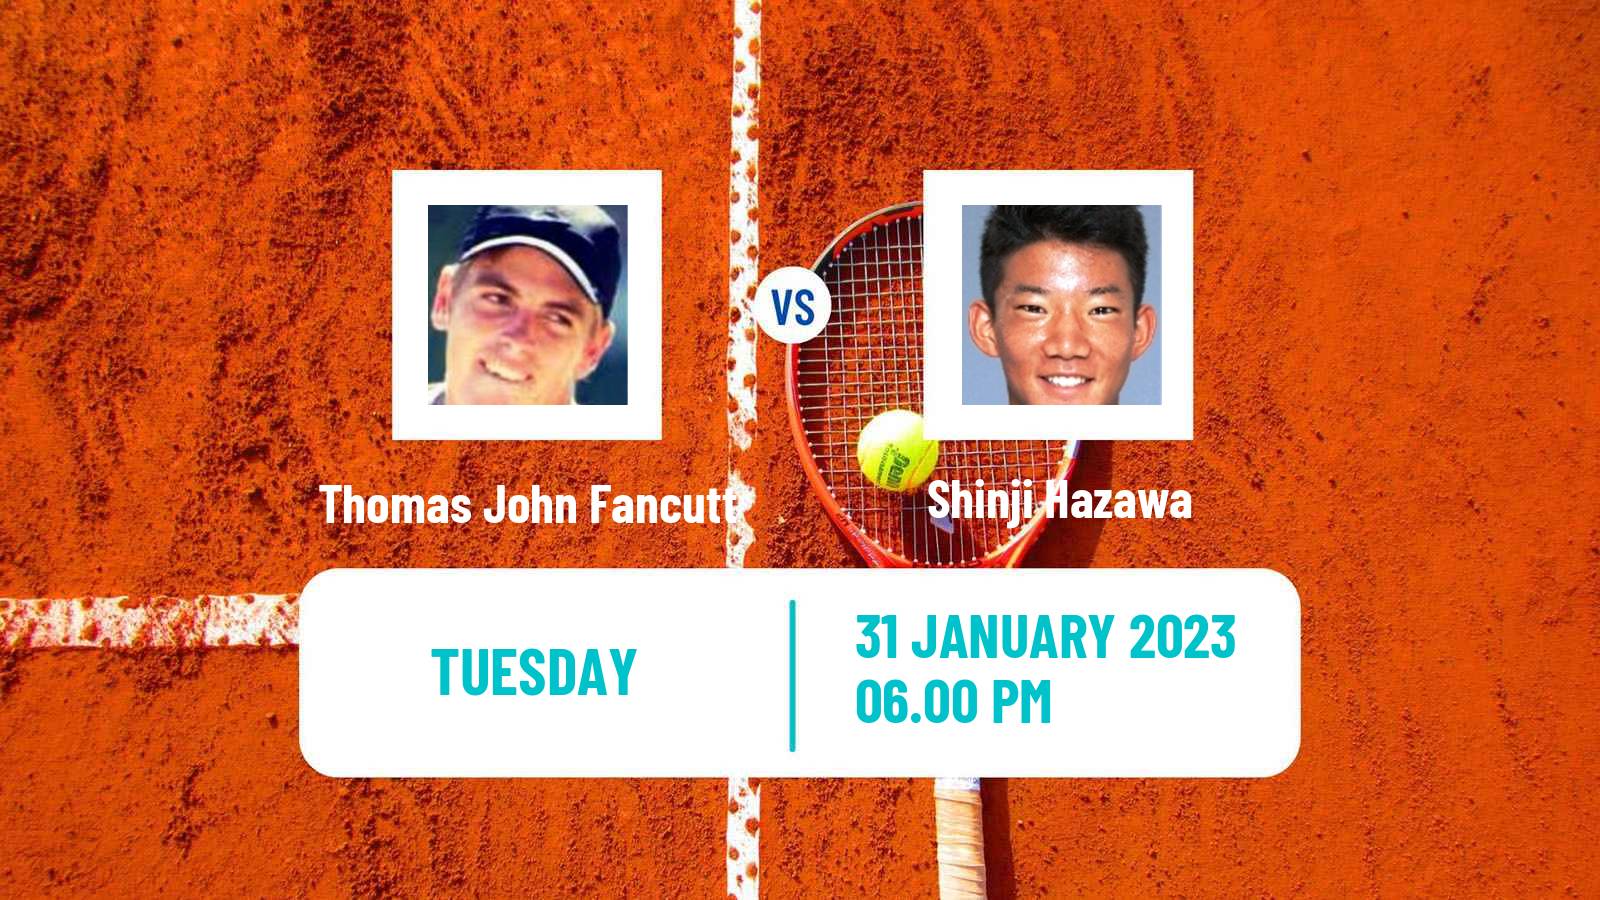 Tennis ATP Challenger Thomas John Fancutt - Shinji Hazawa